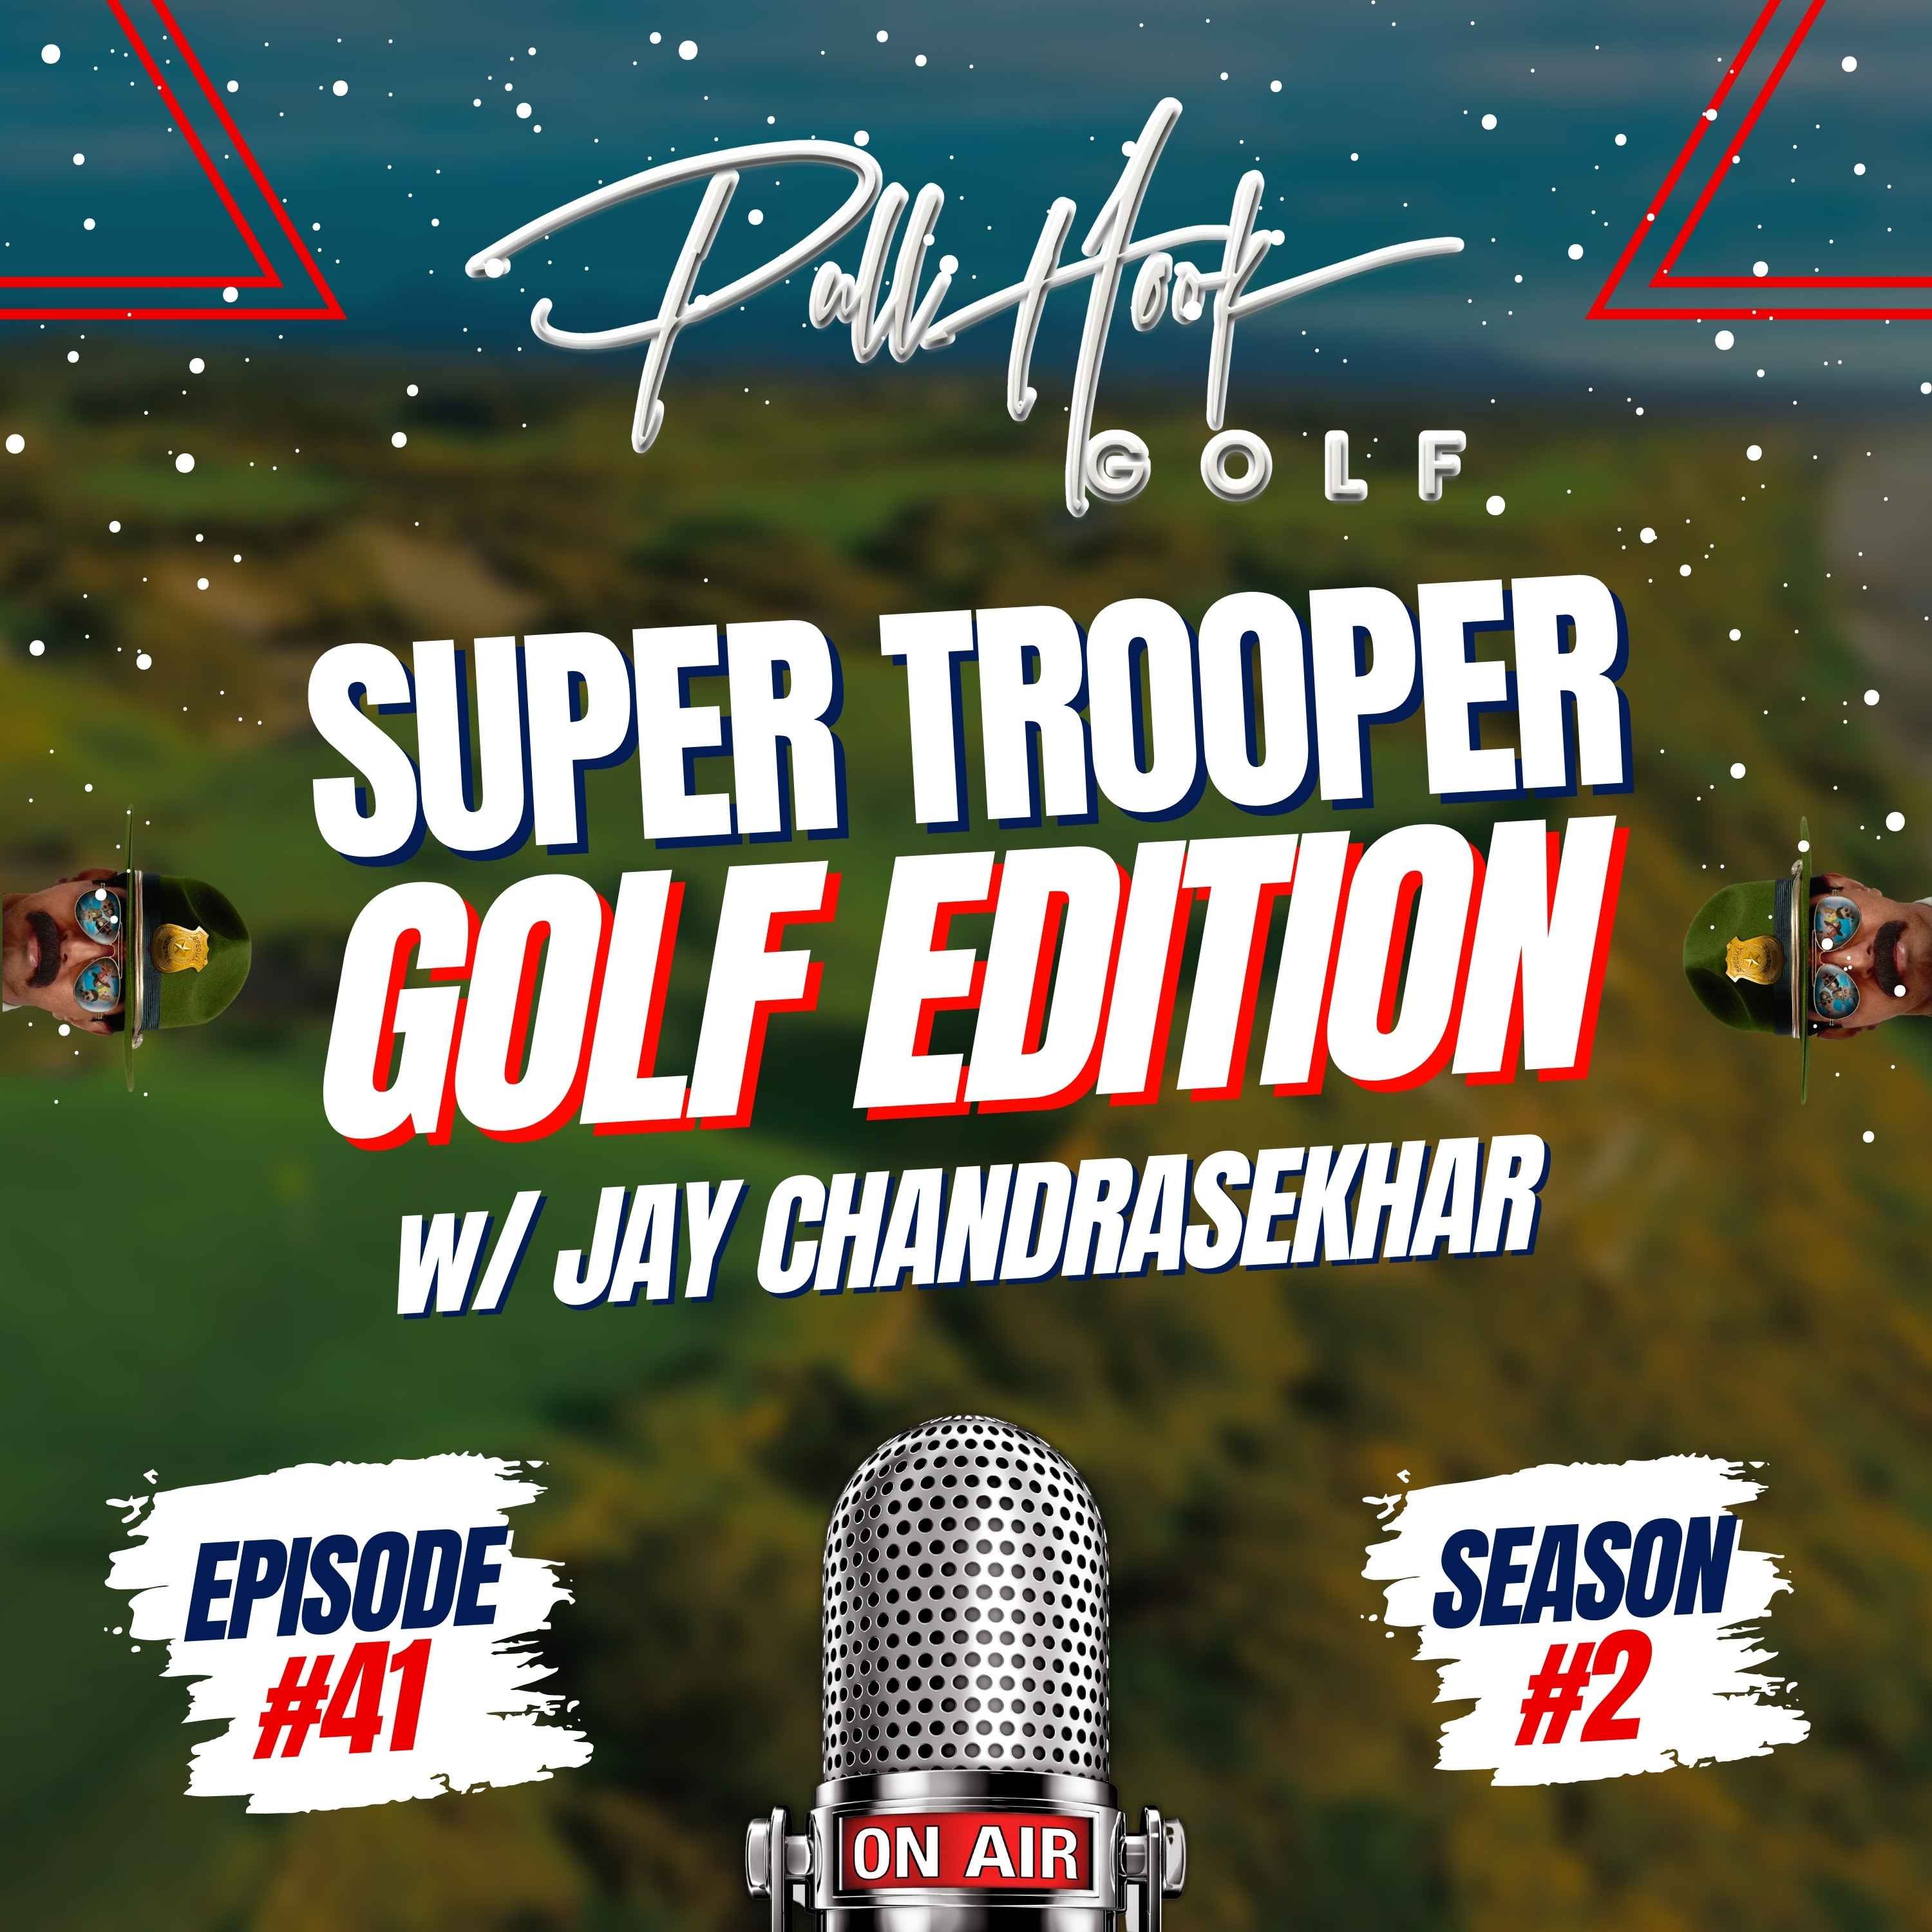 Super Trooper Golf Edition w/ Jay Chandrasekhar